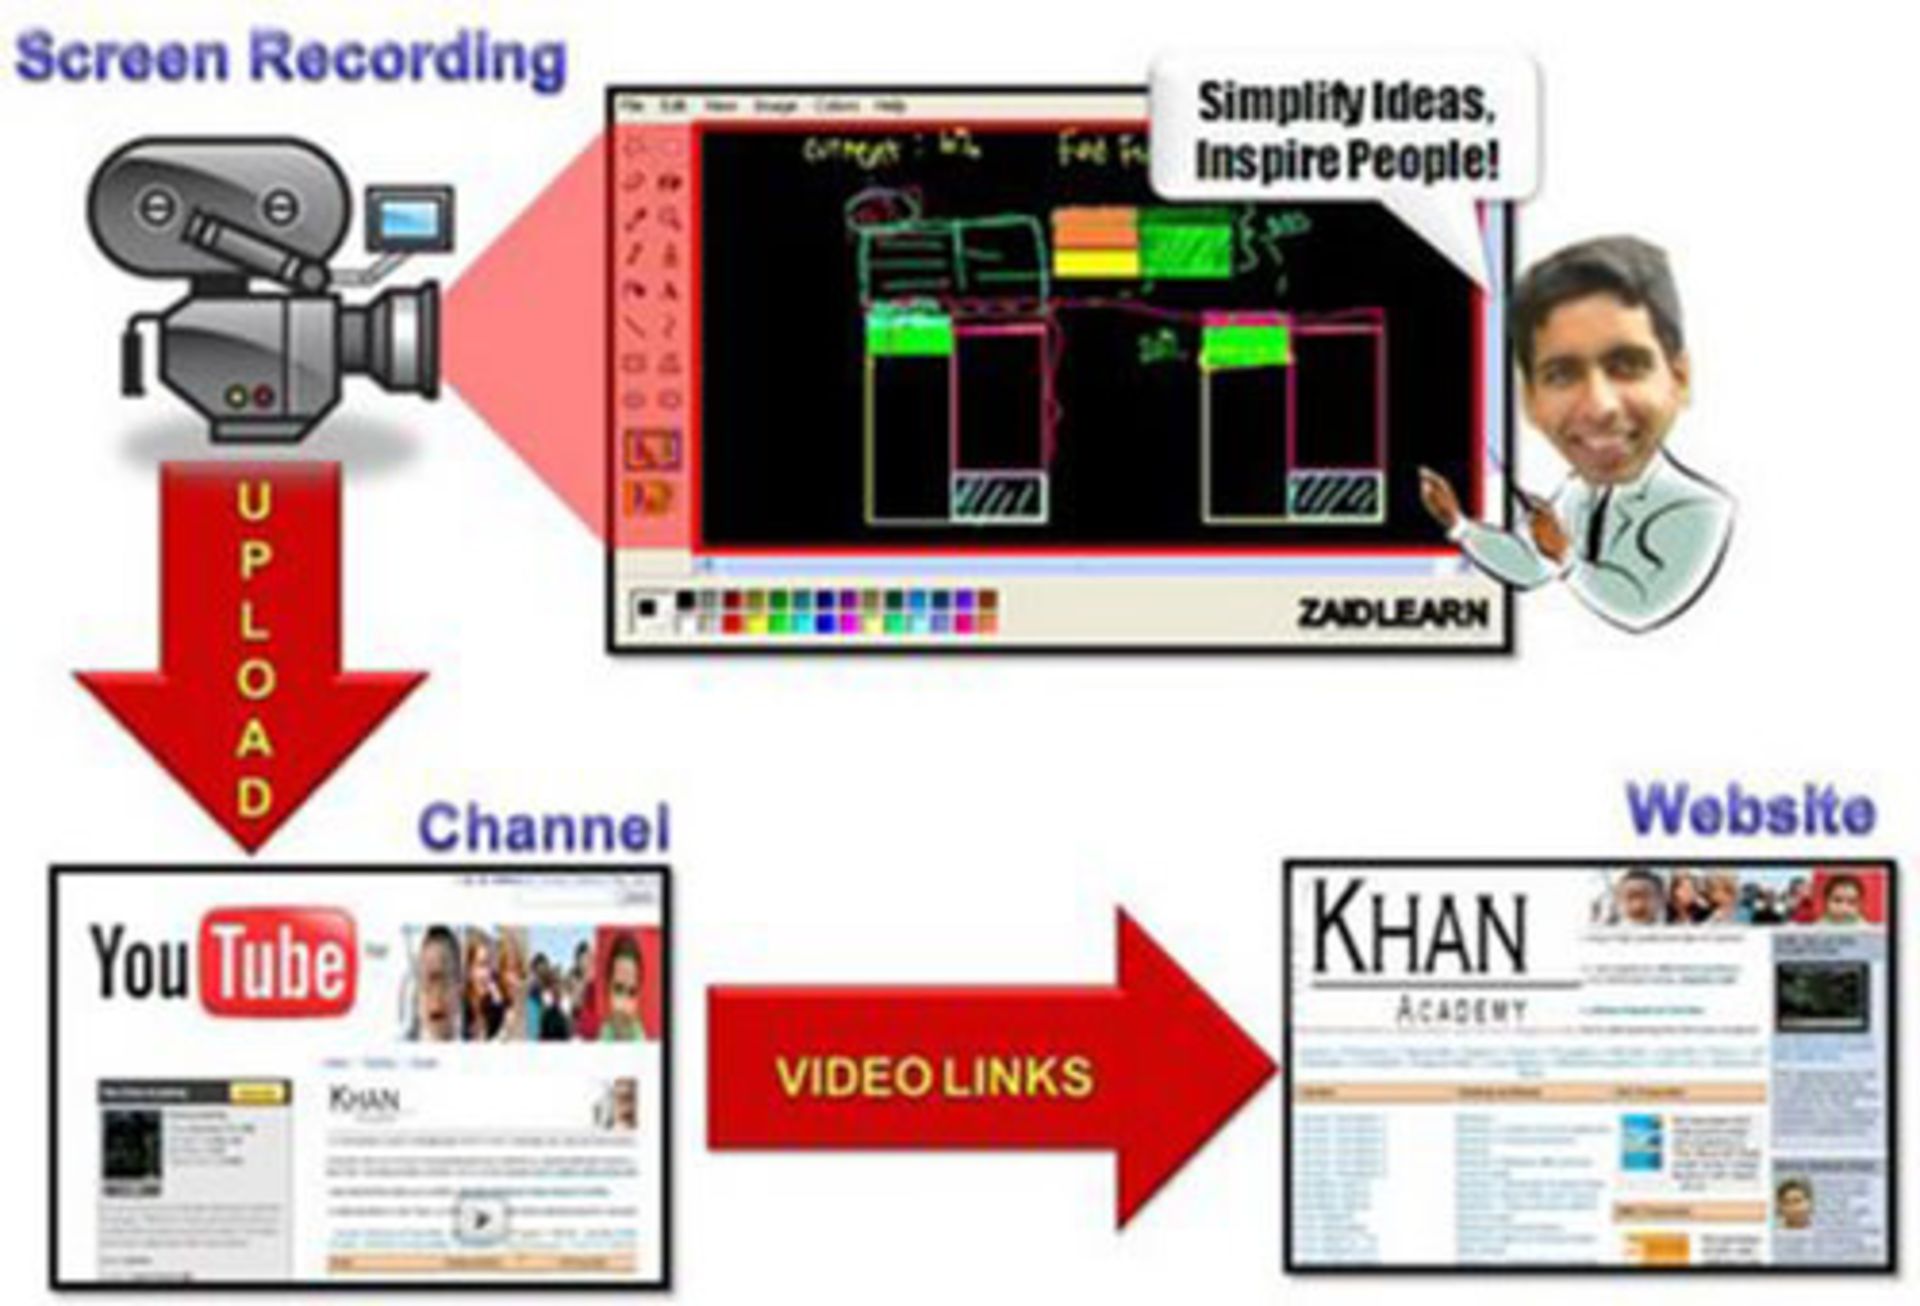 khan-academy-diagram